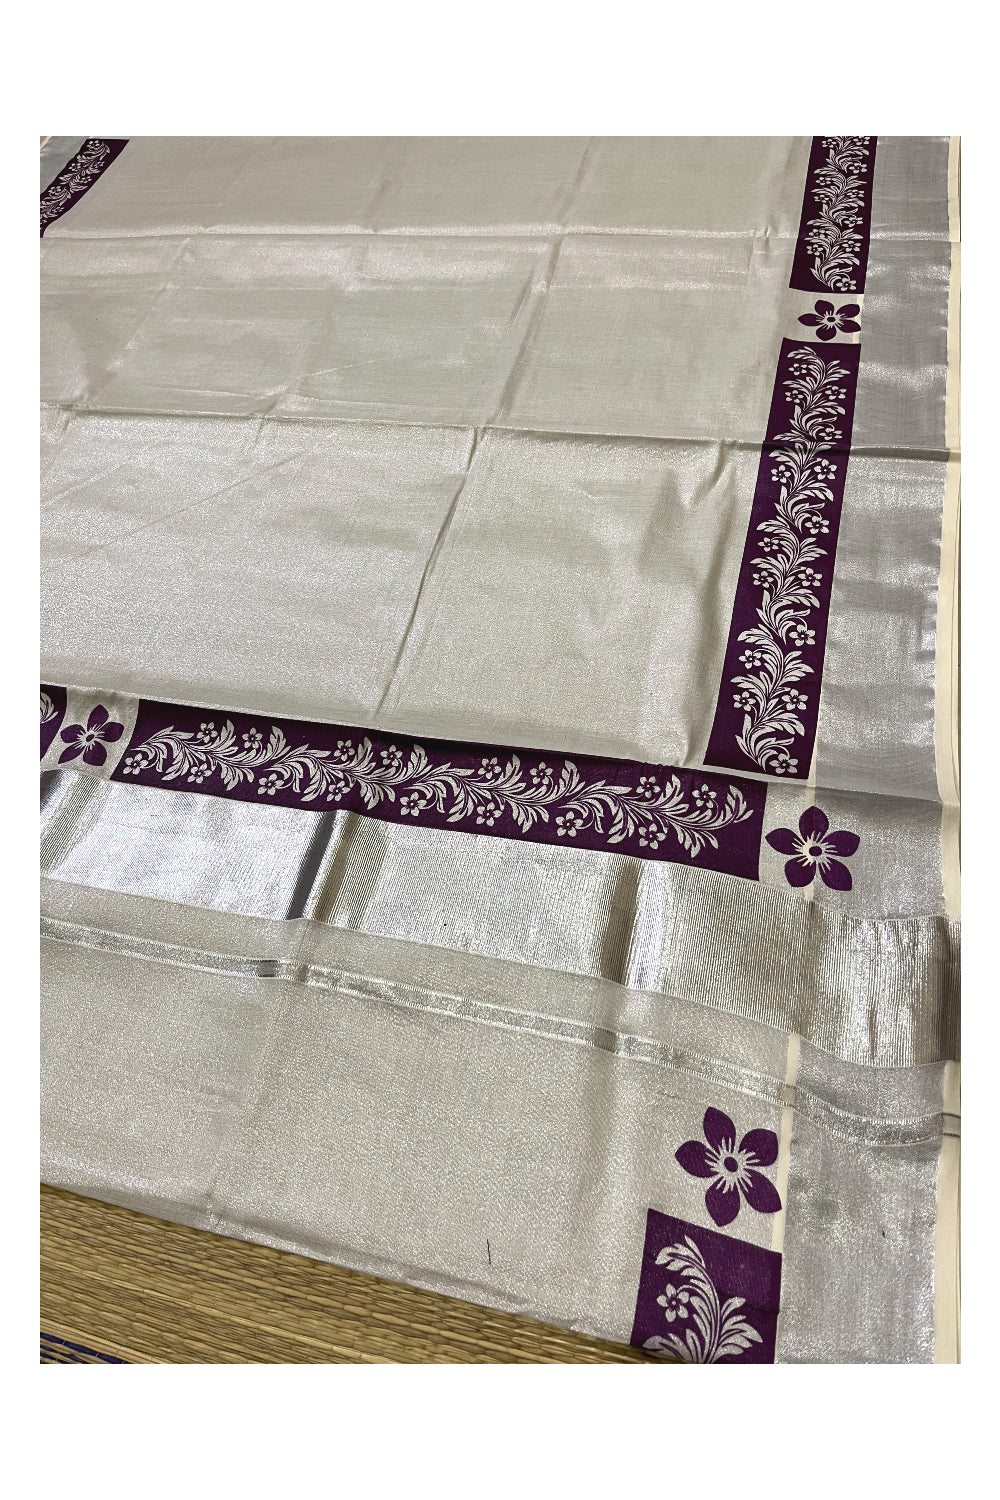 Kerala Silver Tissue Kasavu Saree with Purple Floral Block Prints and Silver Border